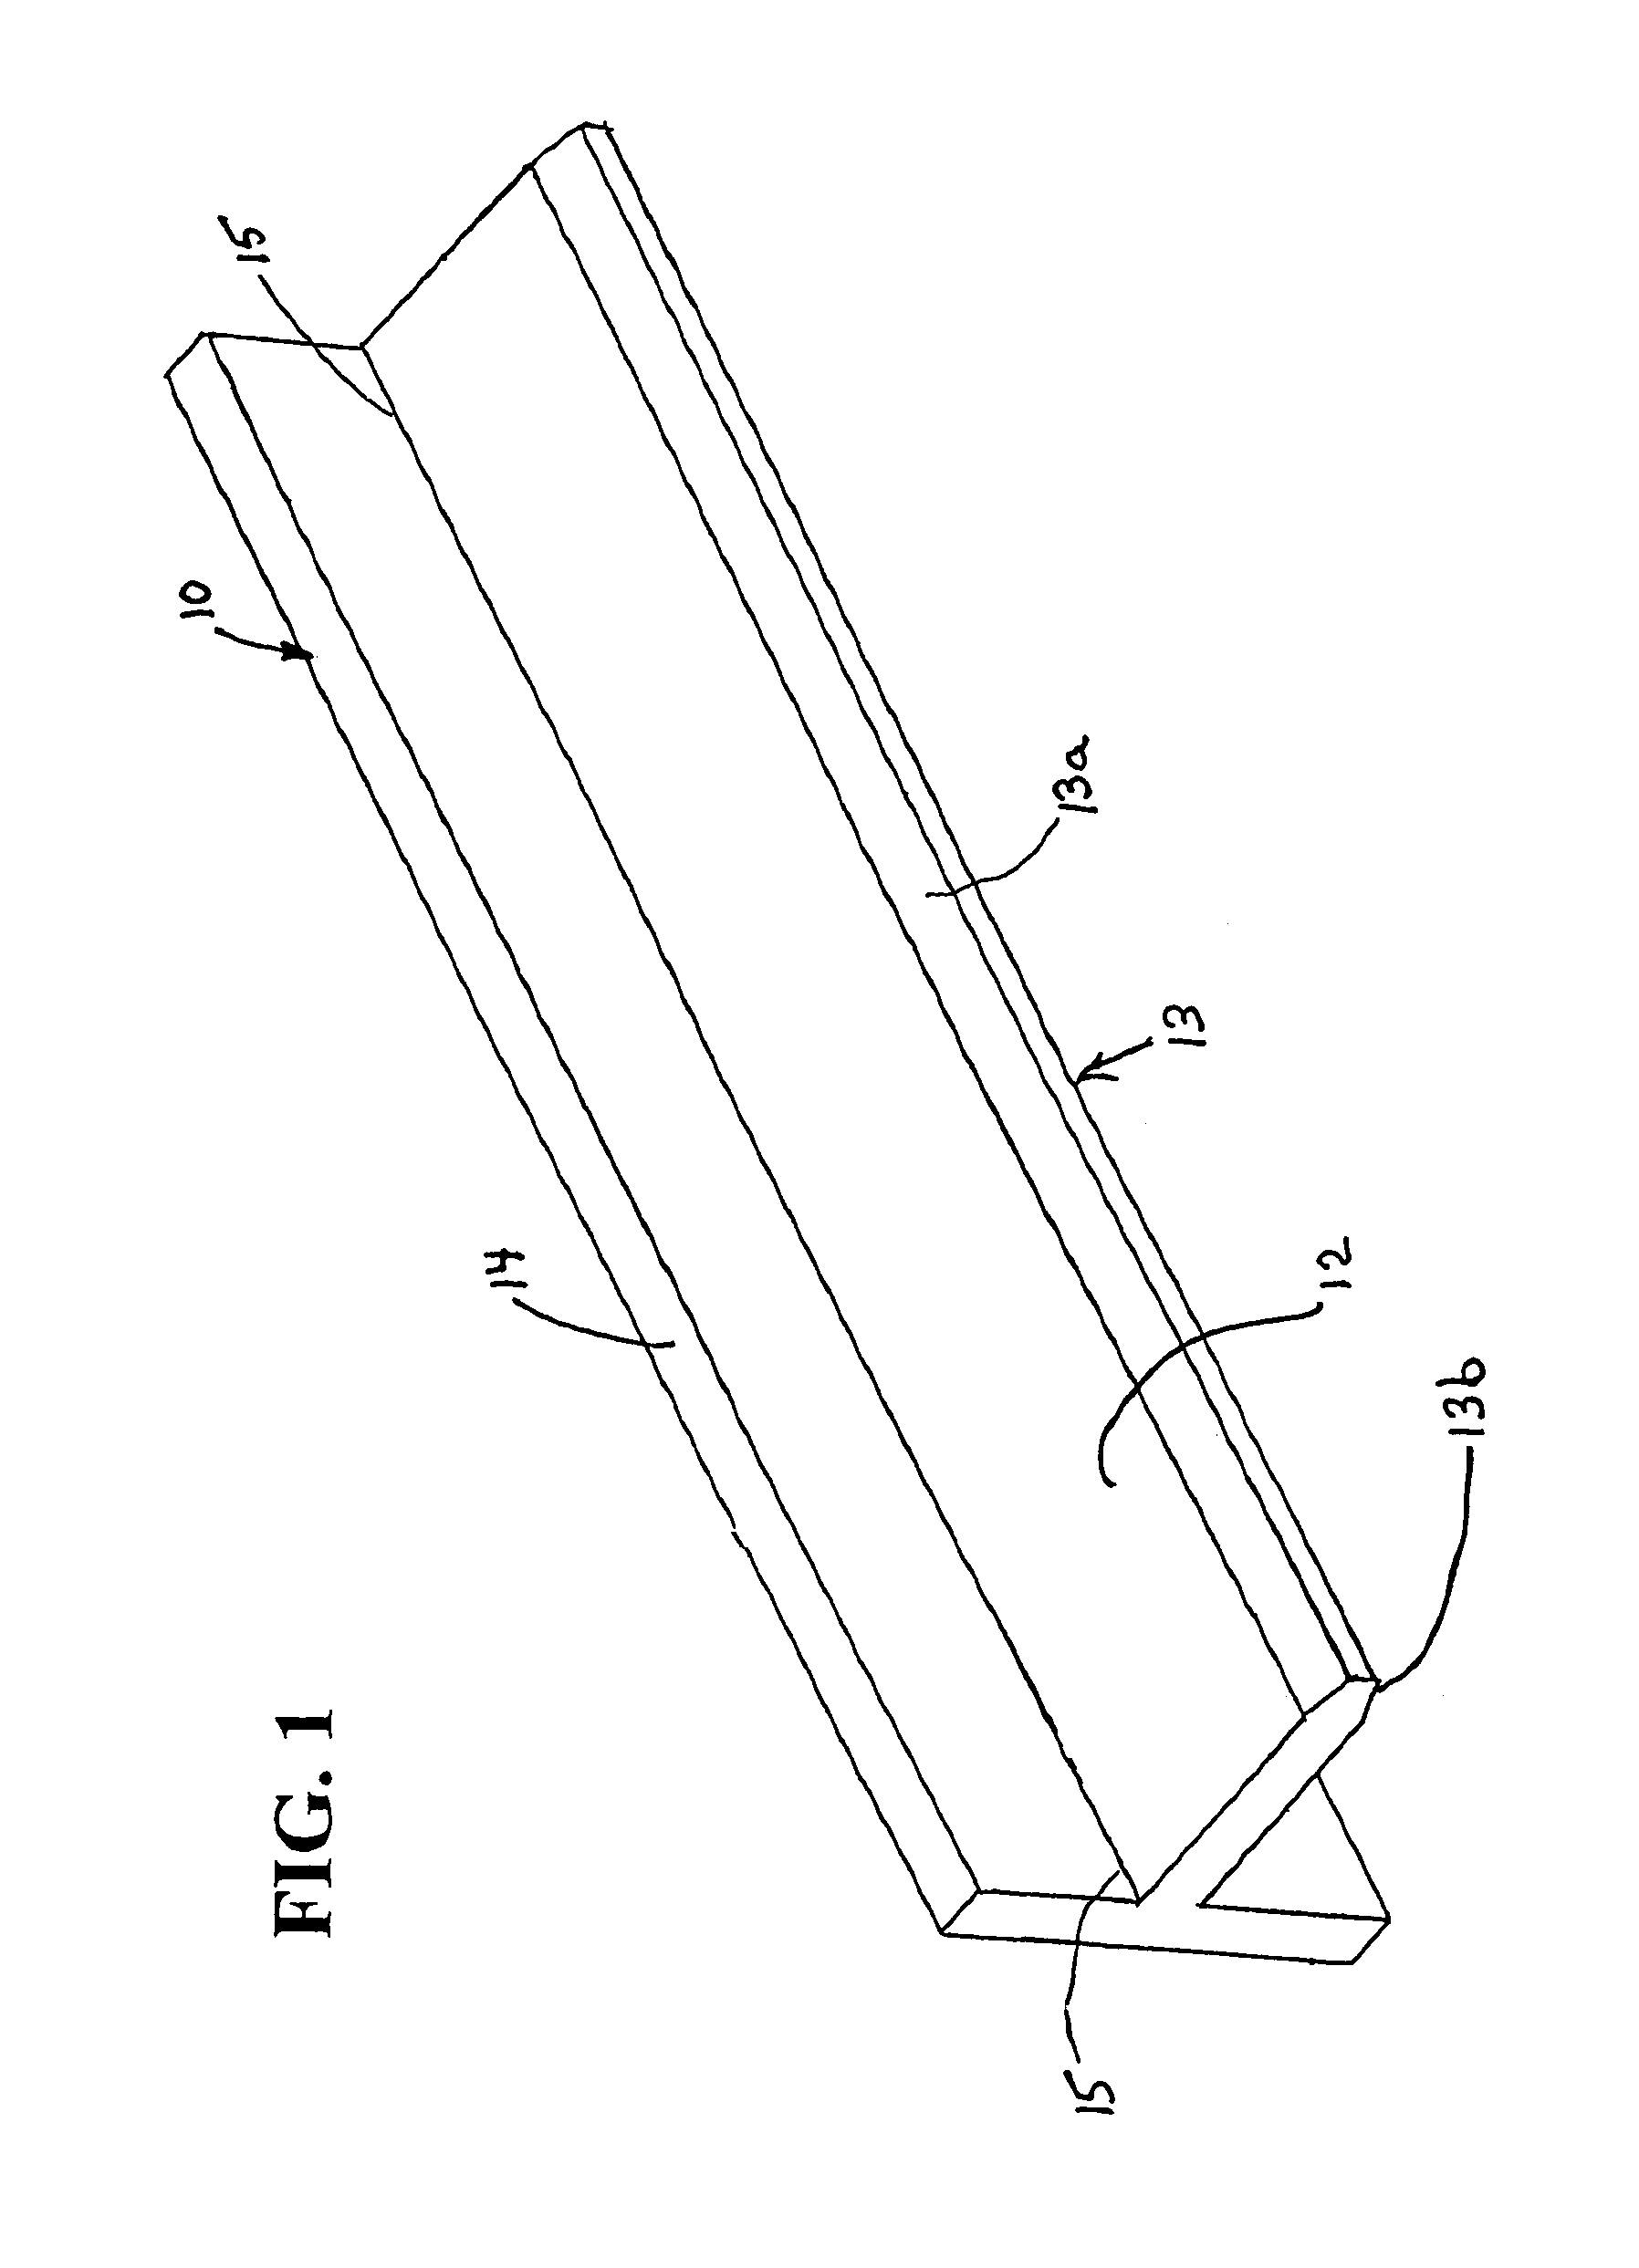 Ice skate blade runner holder and blade runner and method of manufacture